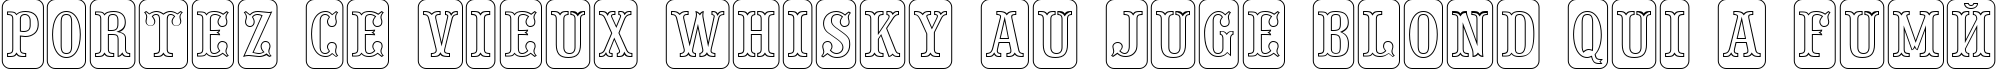 Пример написания шрифтом a_PresentumNrCmDcOtl текста на французском